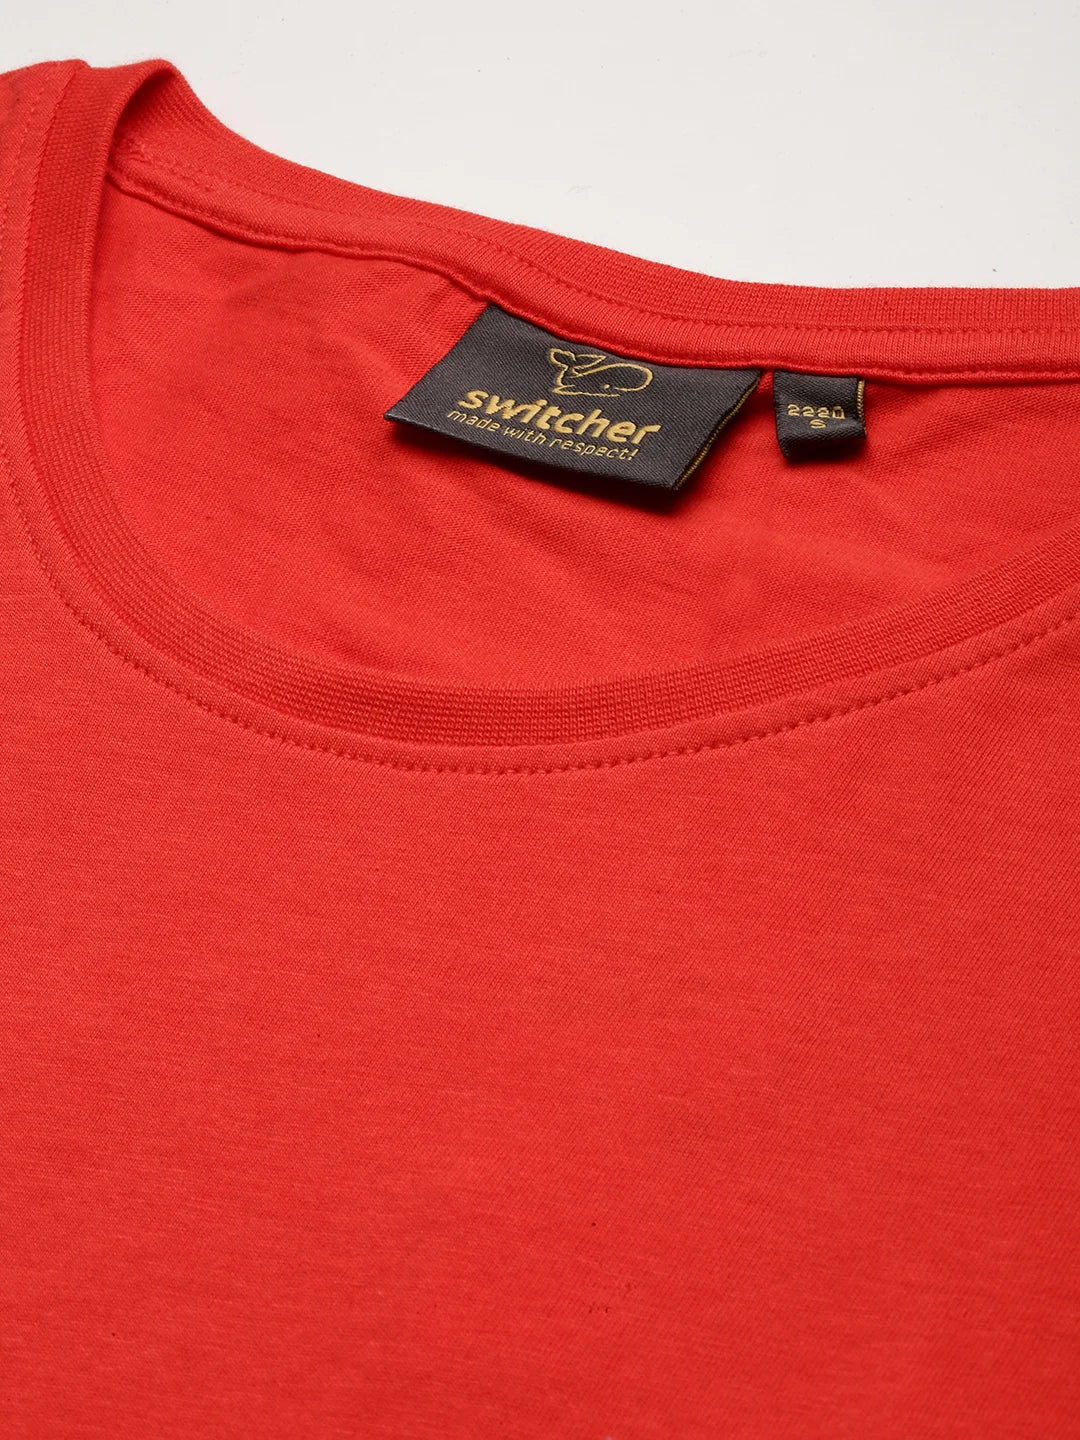 lady-gaia-ladies-organic-fairtrade-t-shirt-scollatura-rouge-front